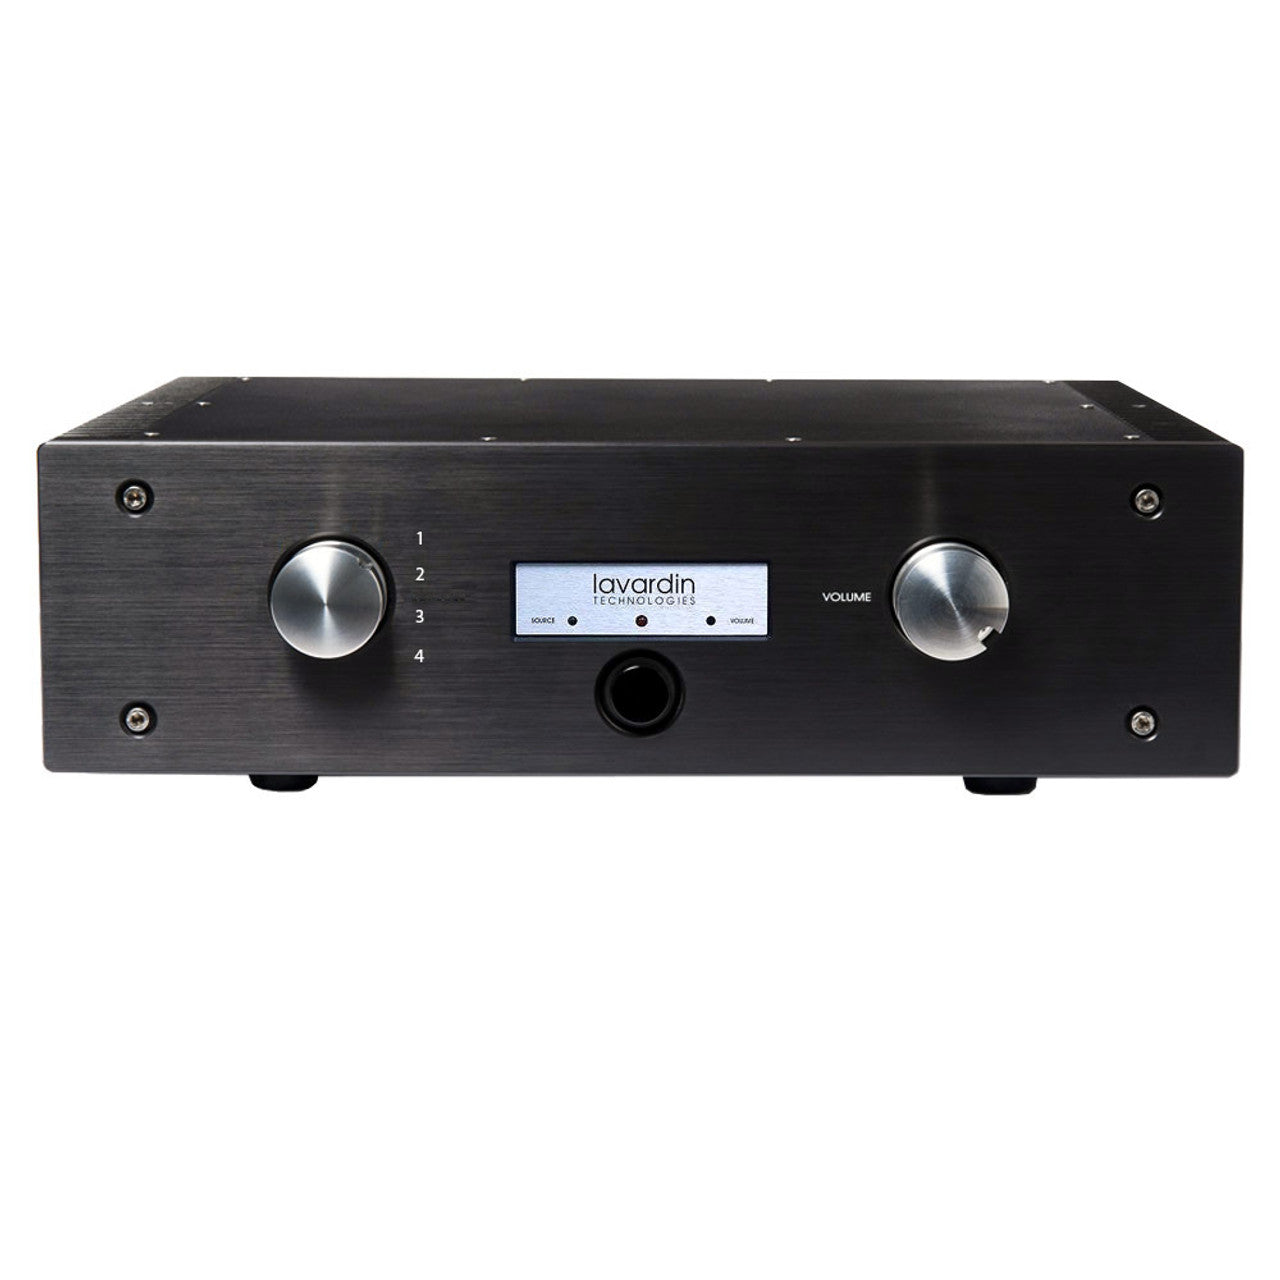 Lavardin ITx20 Stereo Integrated Amplifier